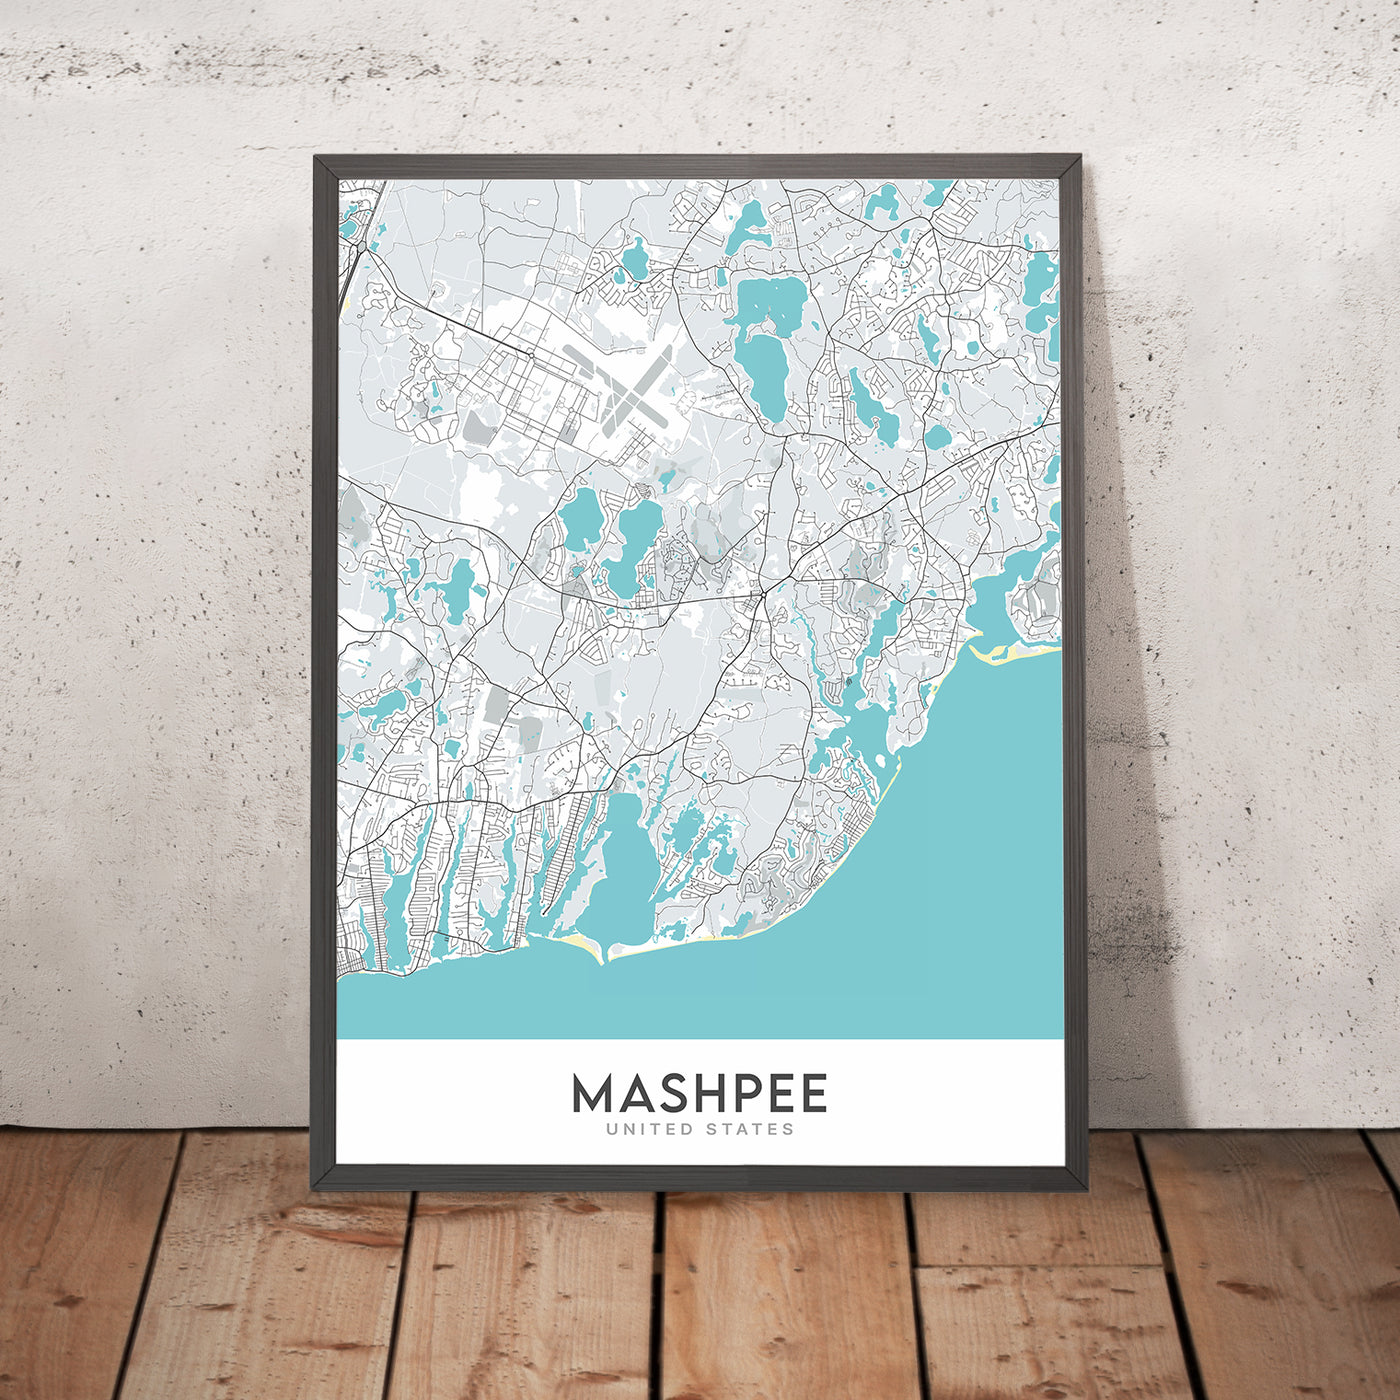 Moderner Stadtplan von Mashpee, MA: Mashpee Commons, South Cape Beach State Park, Waquoit Bay National Estuarine Research Reserve, Popponesset Beach, Santuit Pond